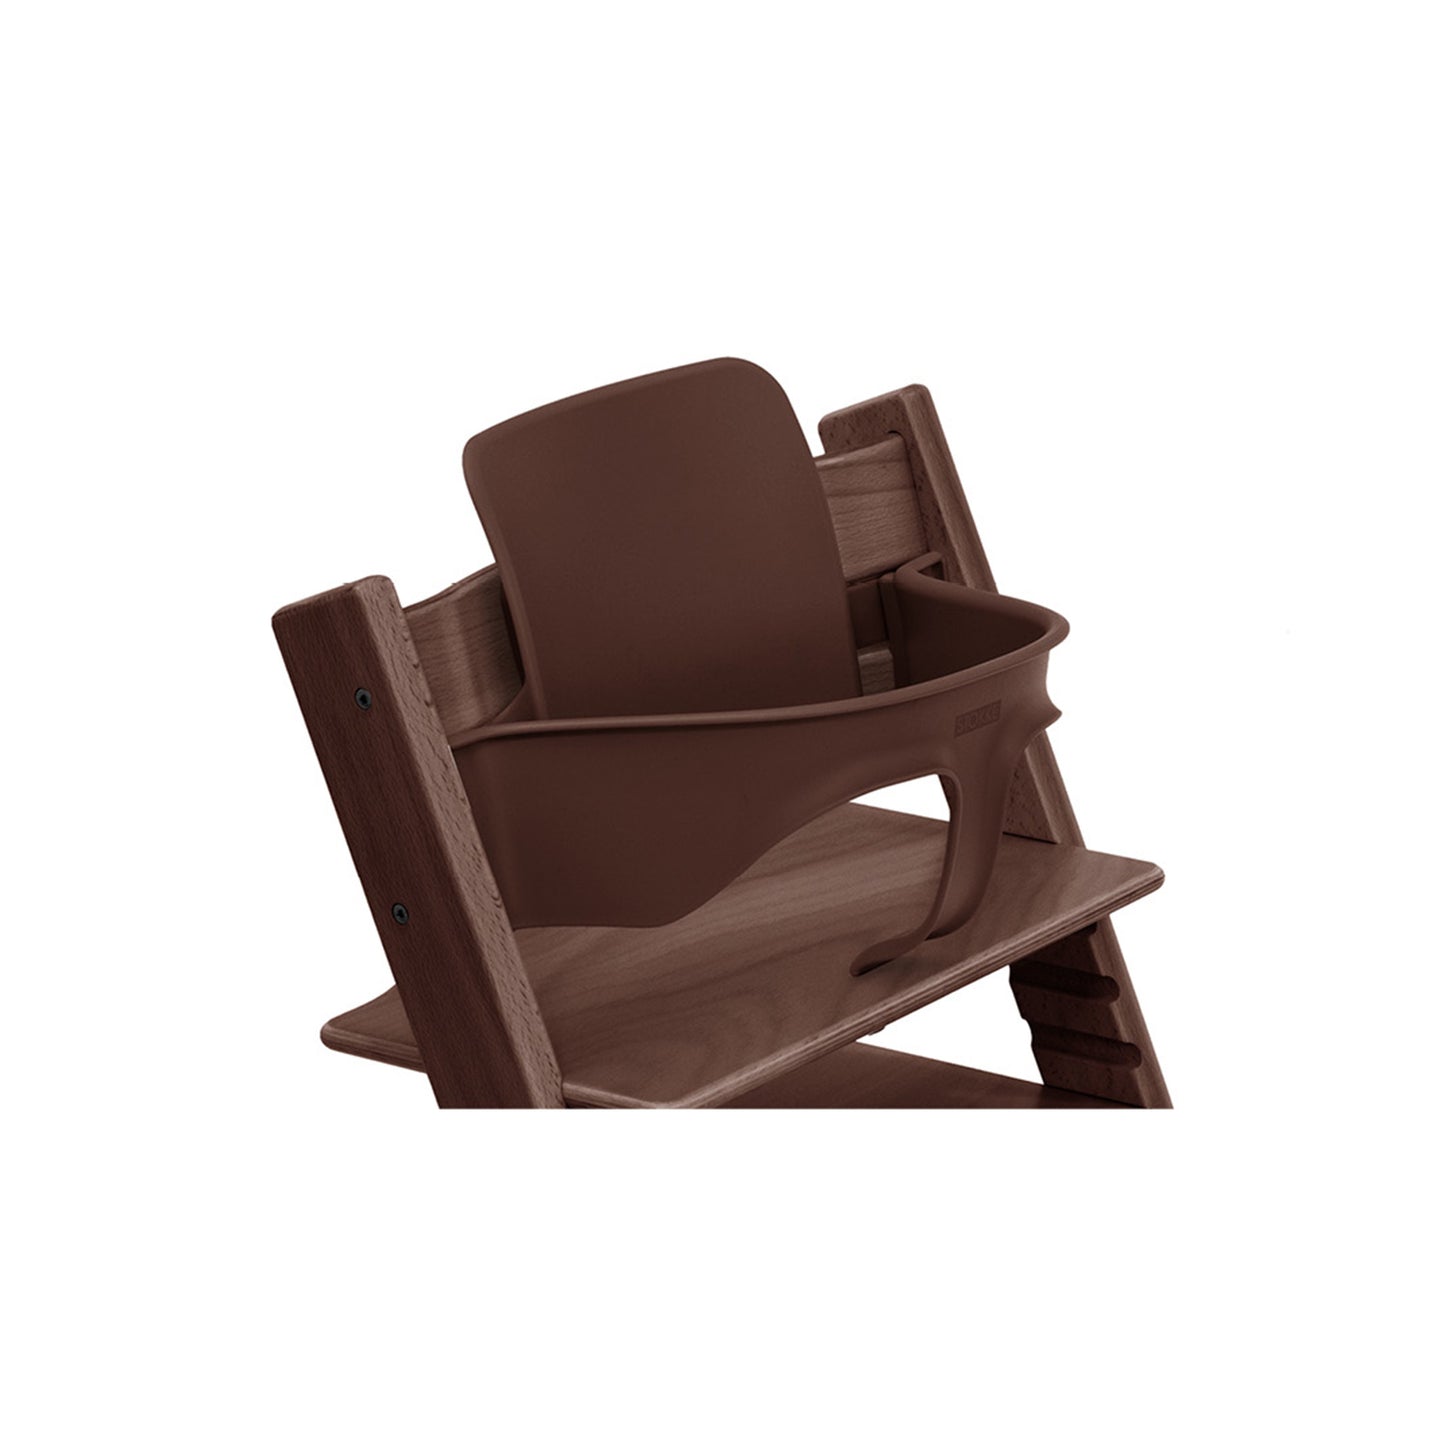 STOKKE - Baby Set Chair TRIPP TRAPP